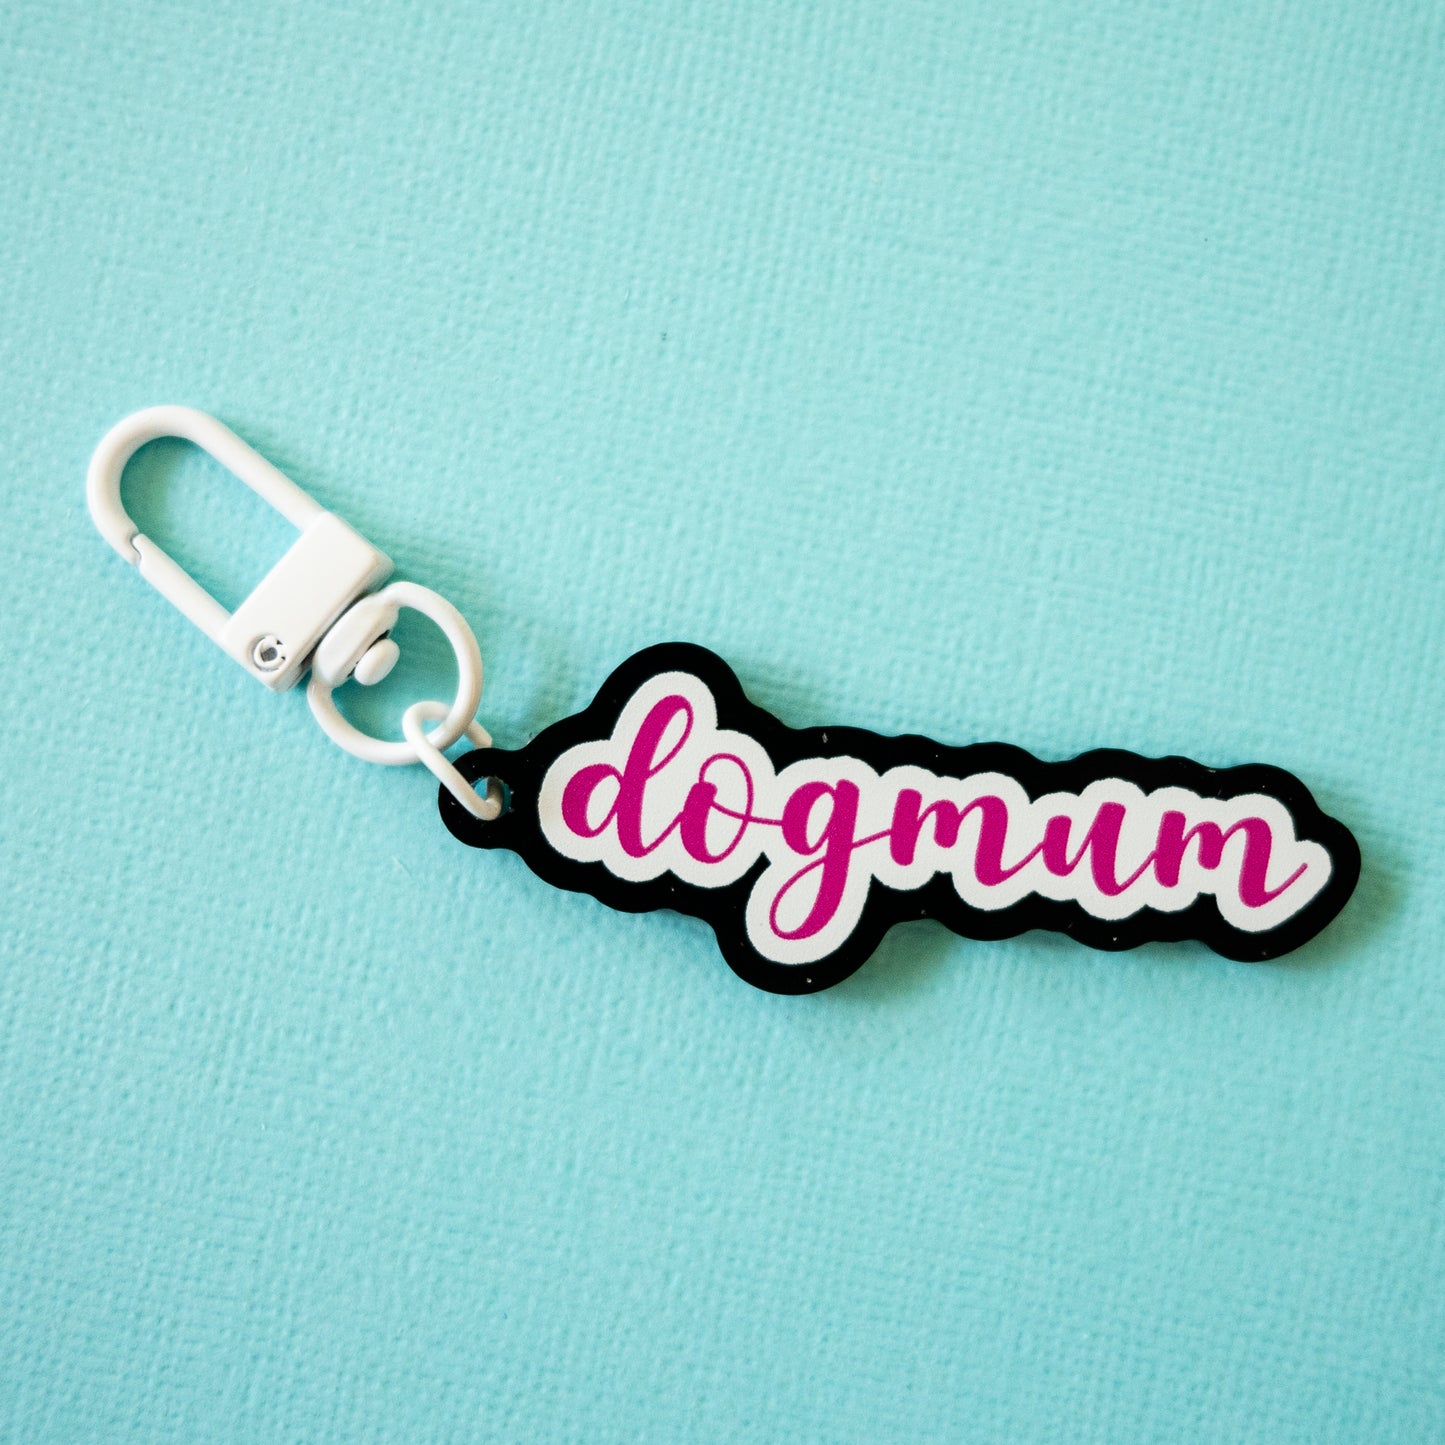 Dog Mum Keychain - Pink, Black & White